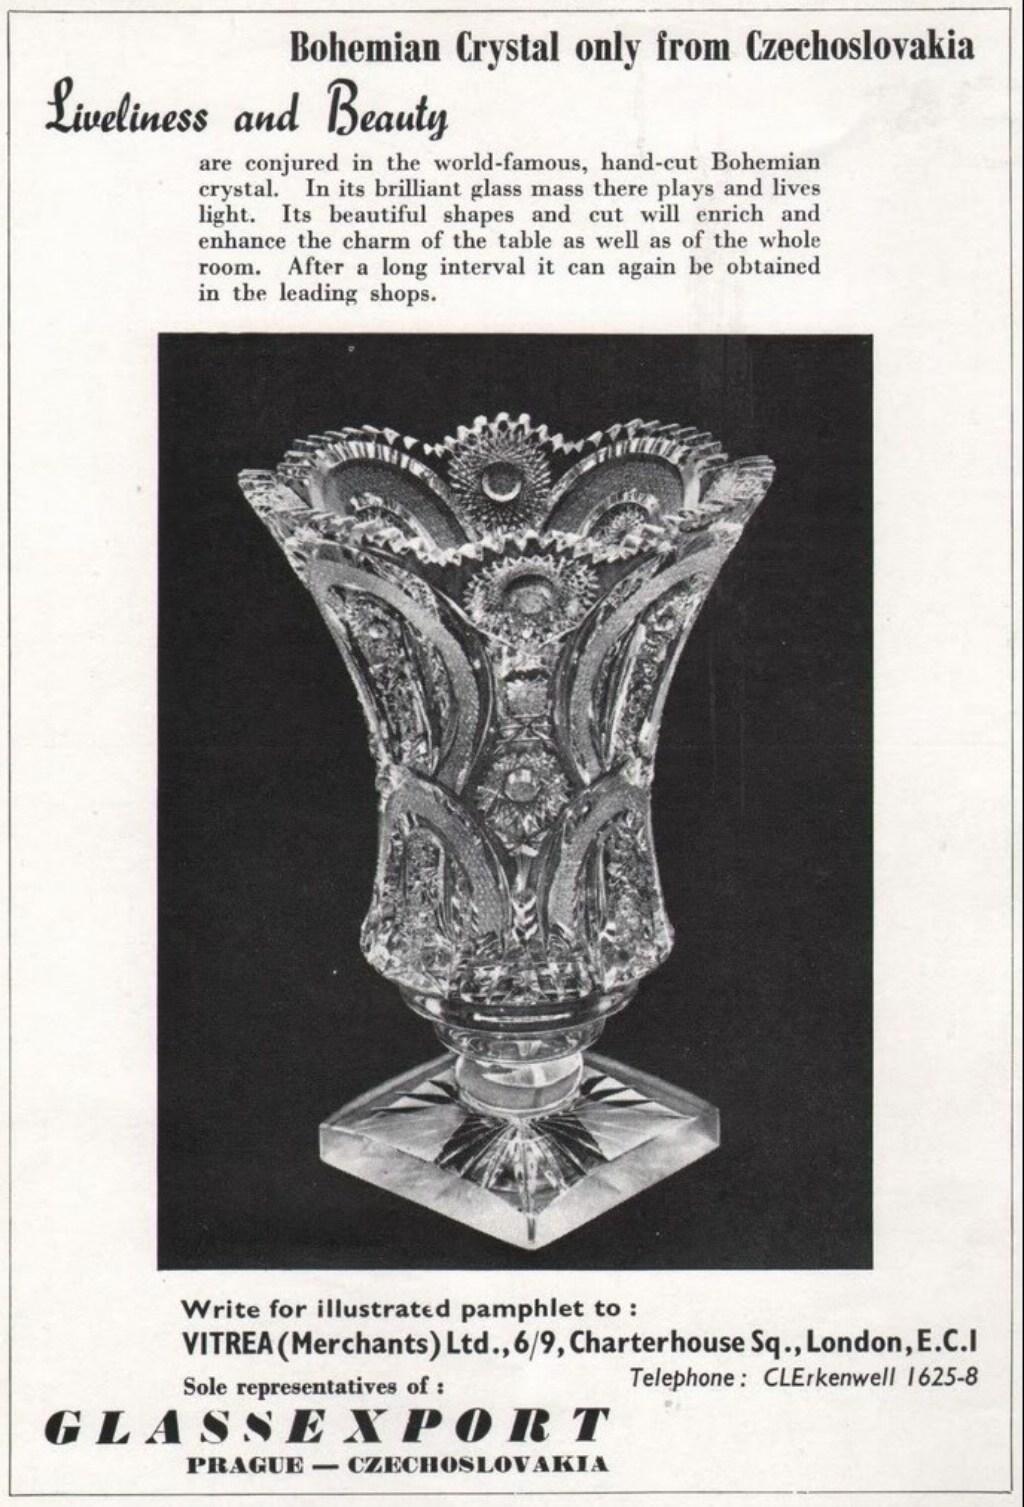 "Glassexport 1957"